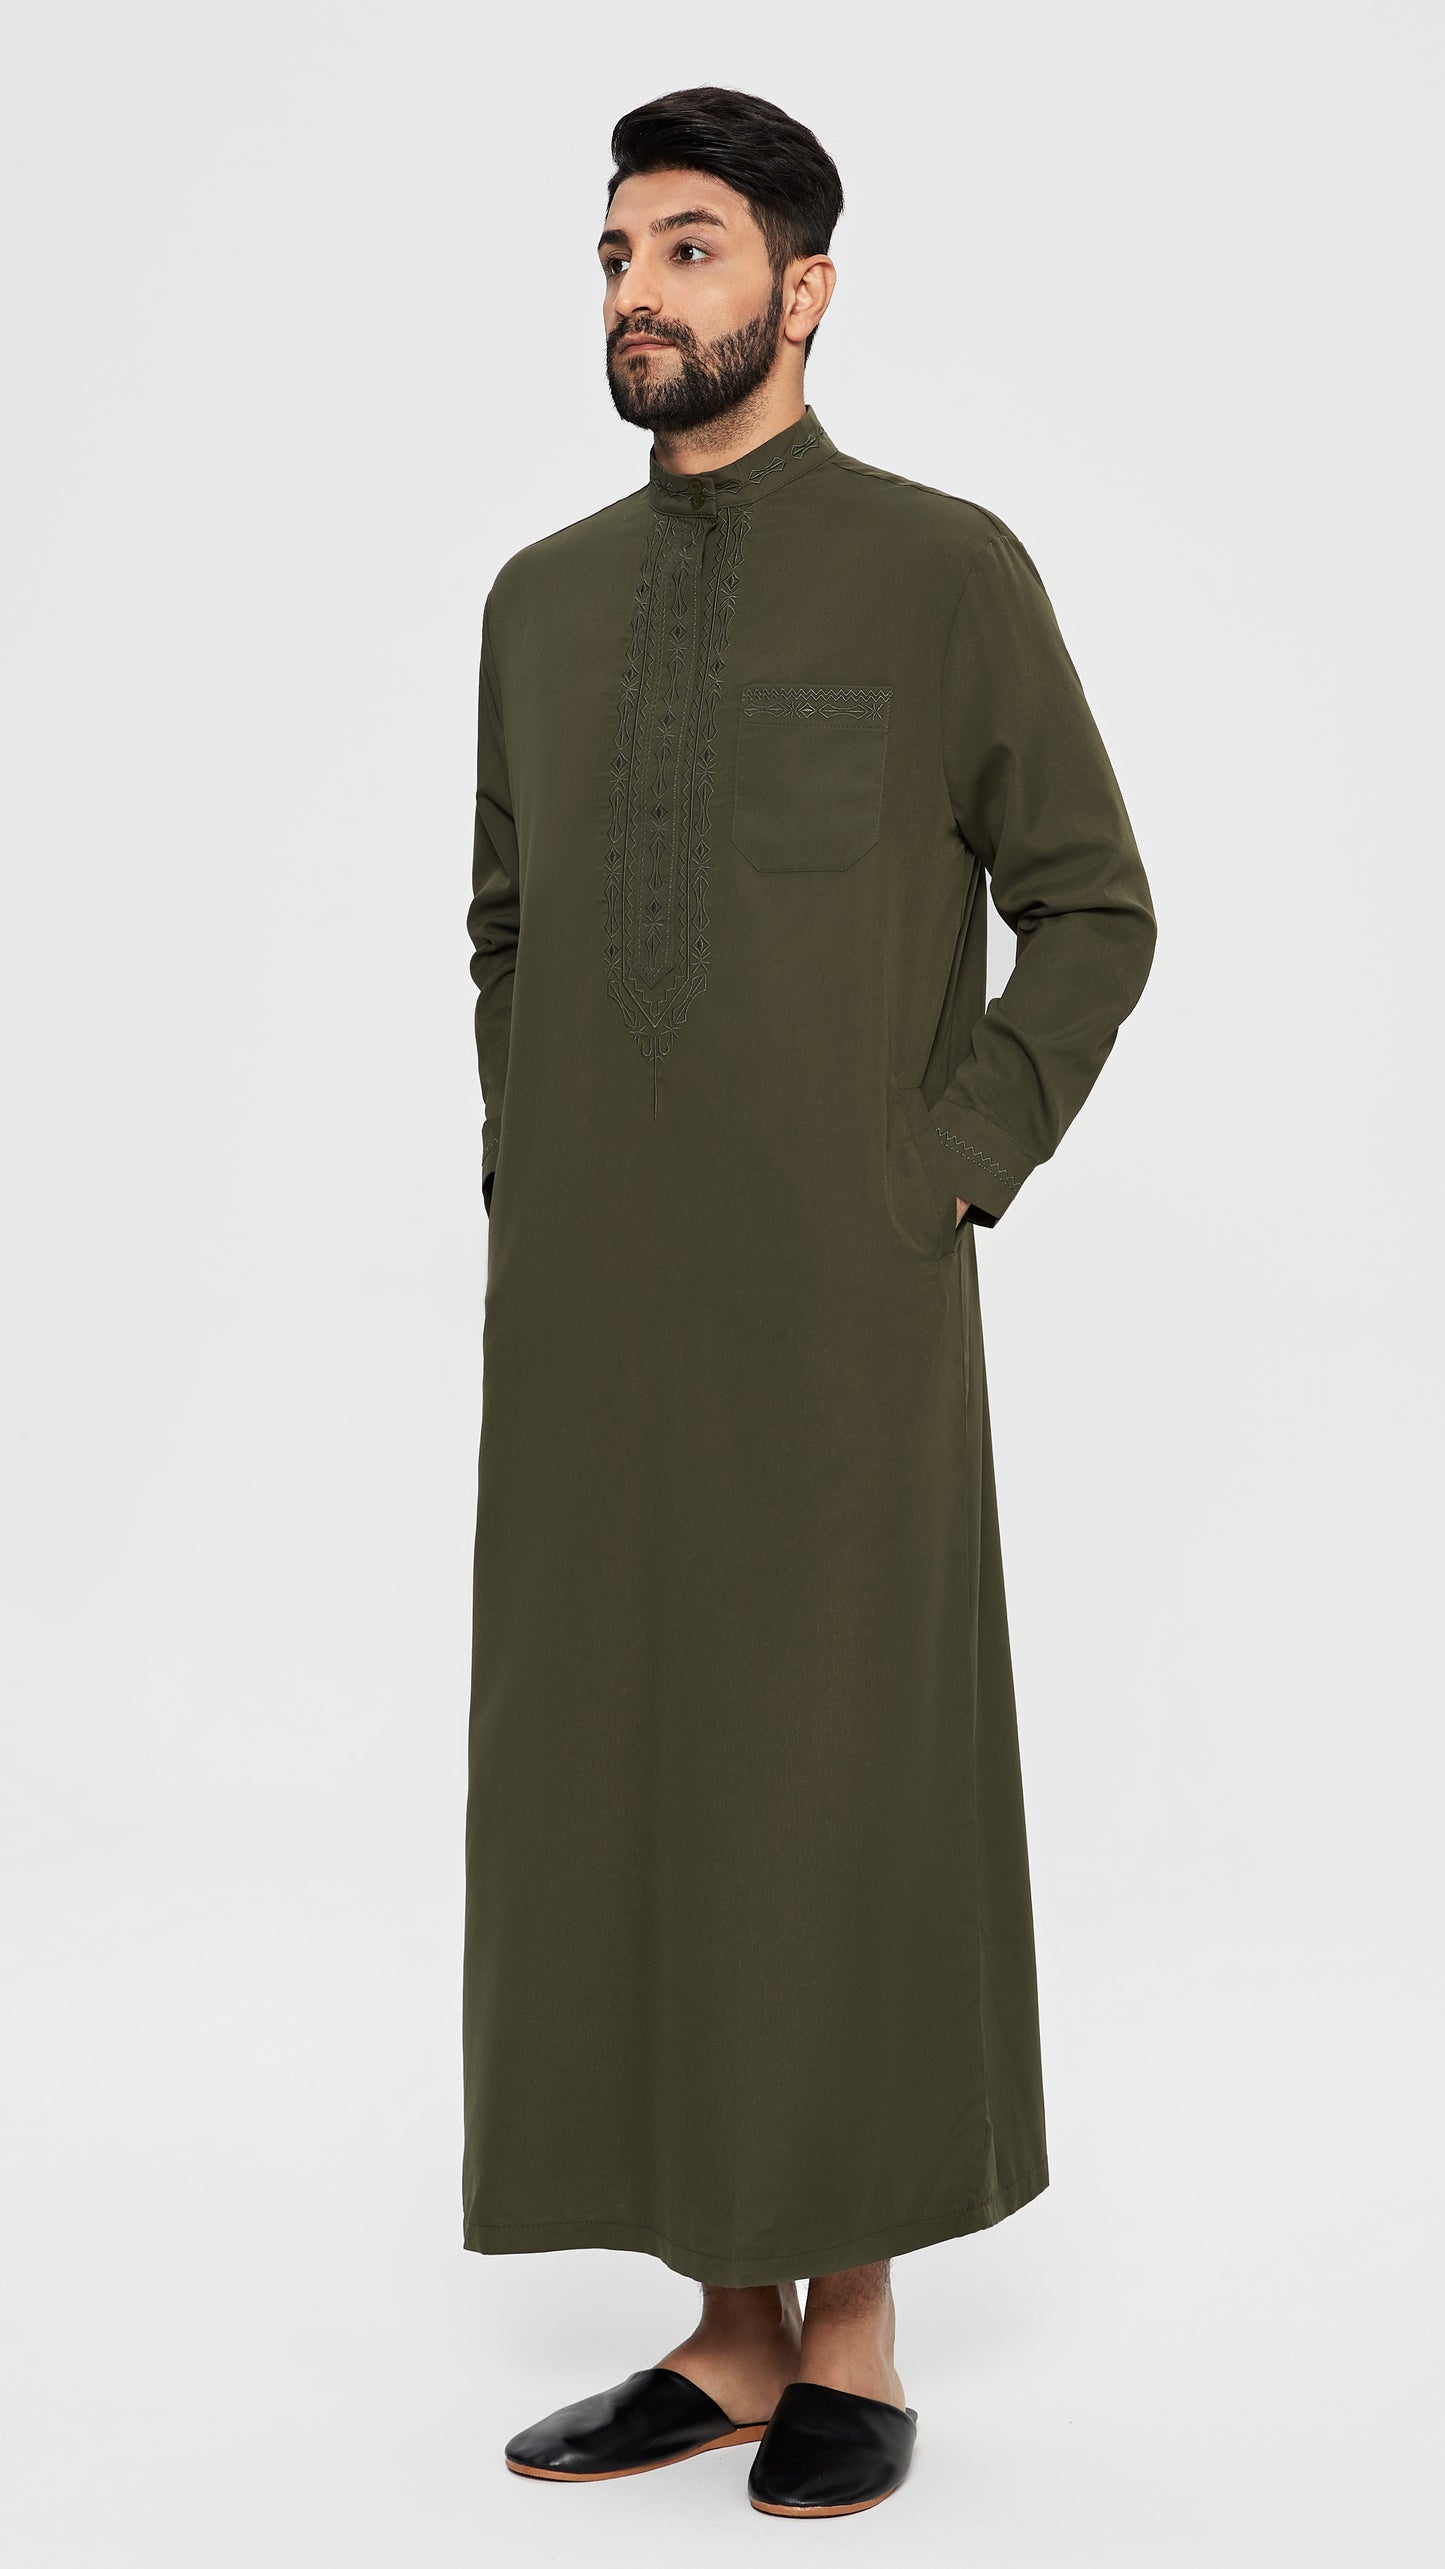 Qamis - Saudí Caqui con bordado de corbata